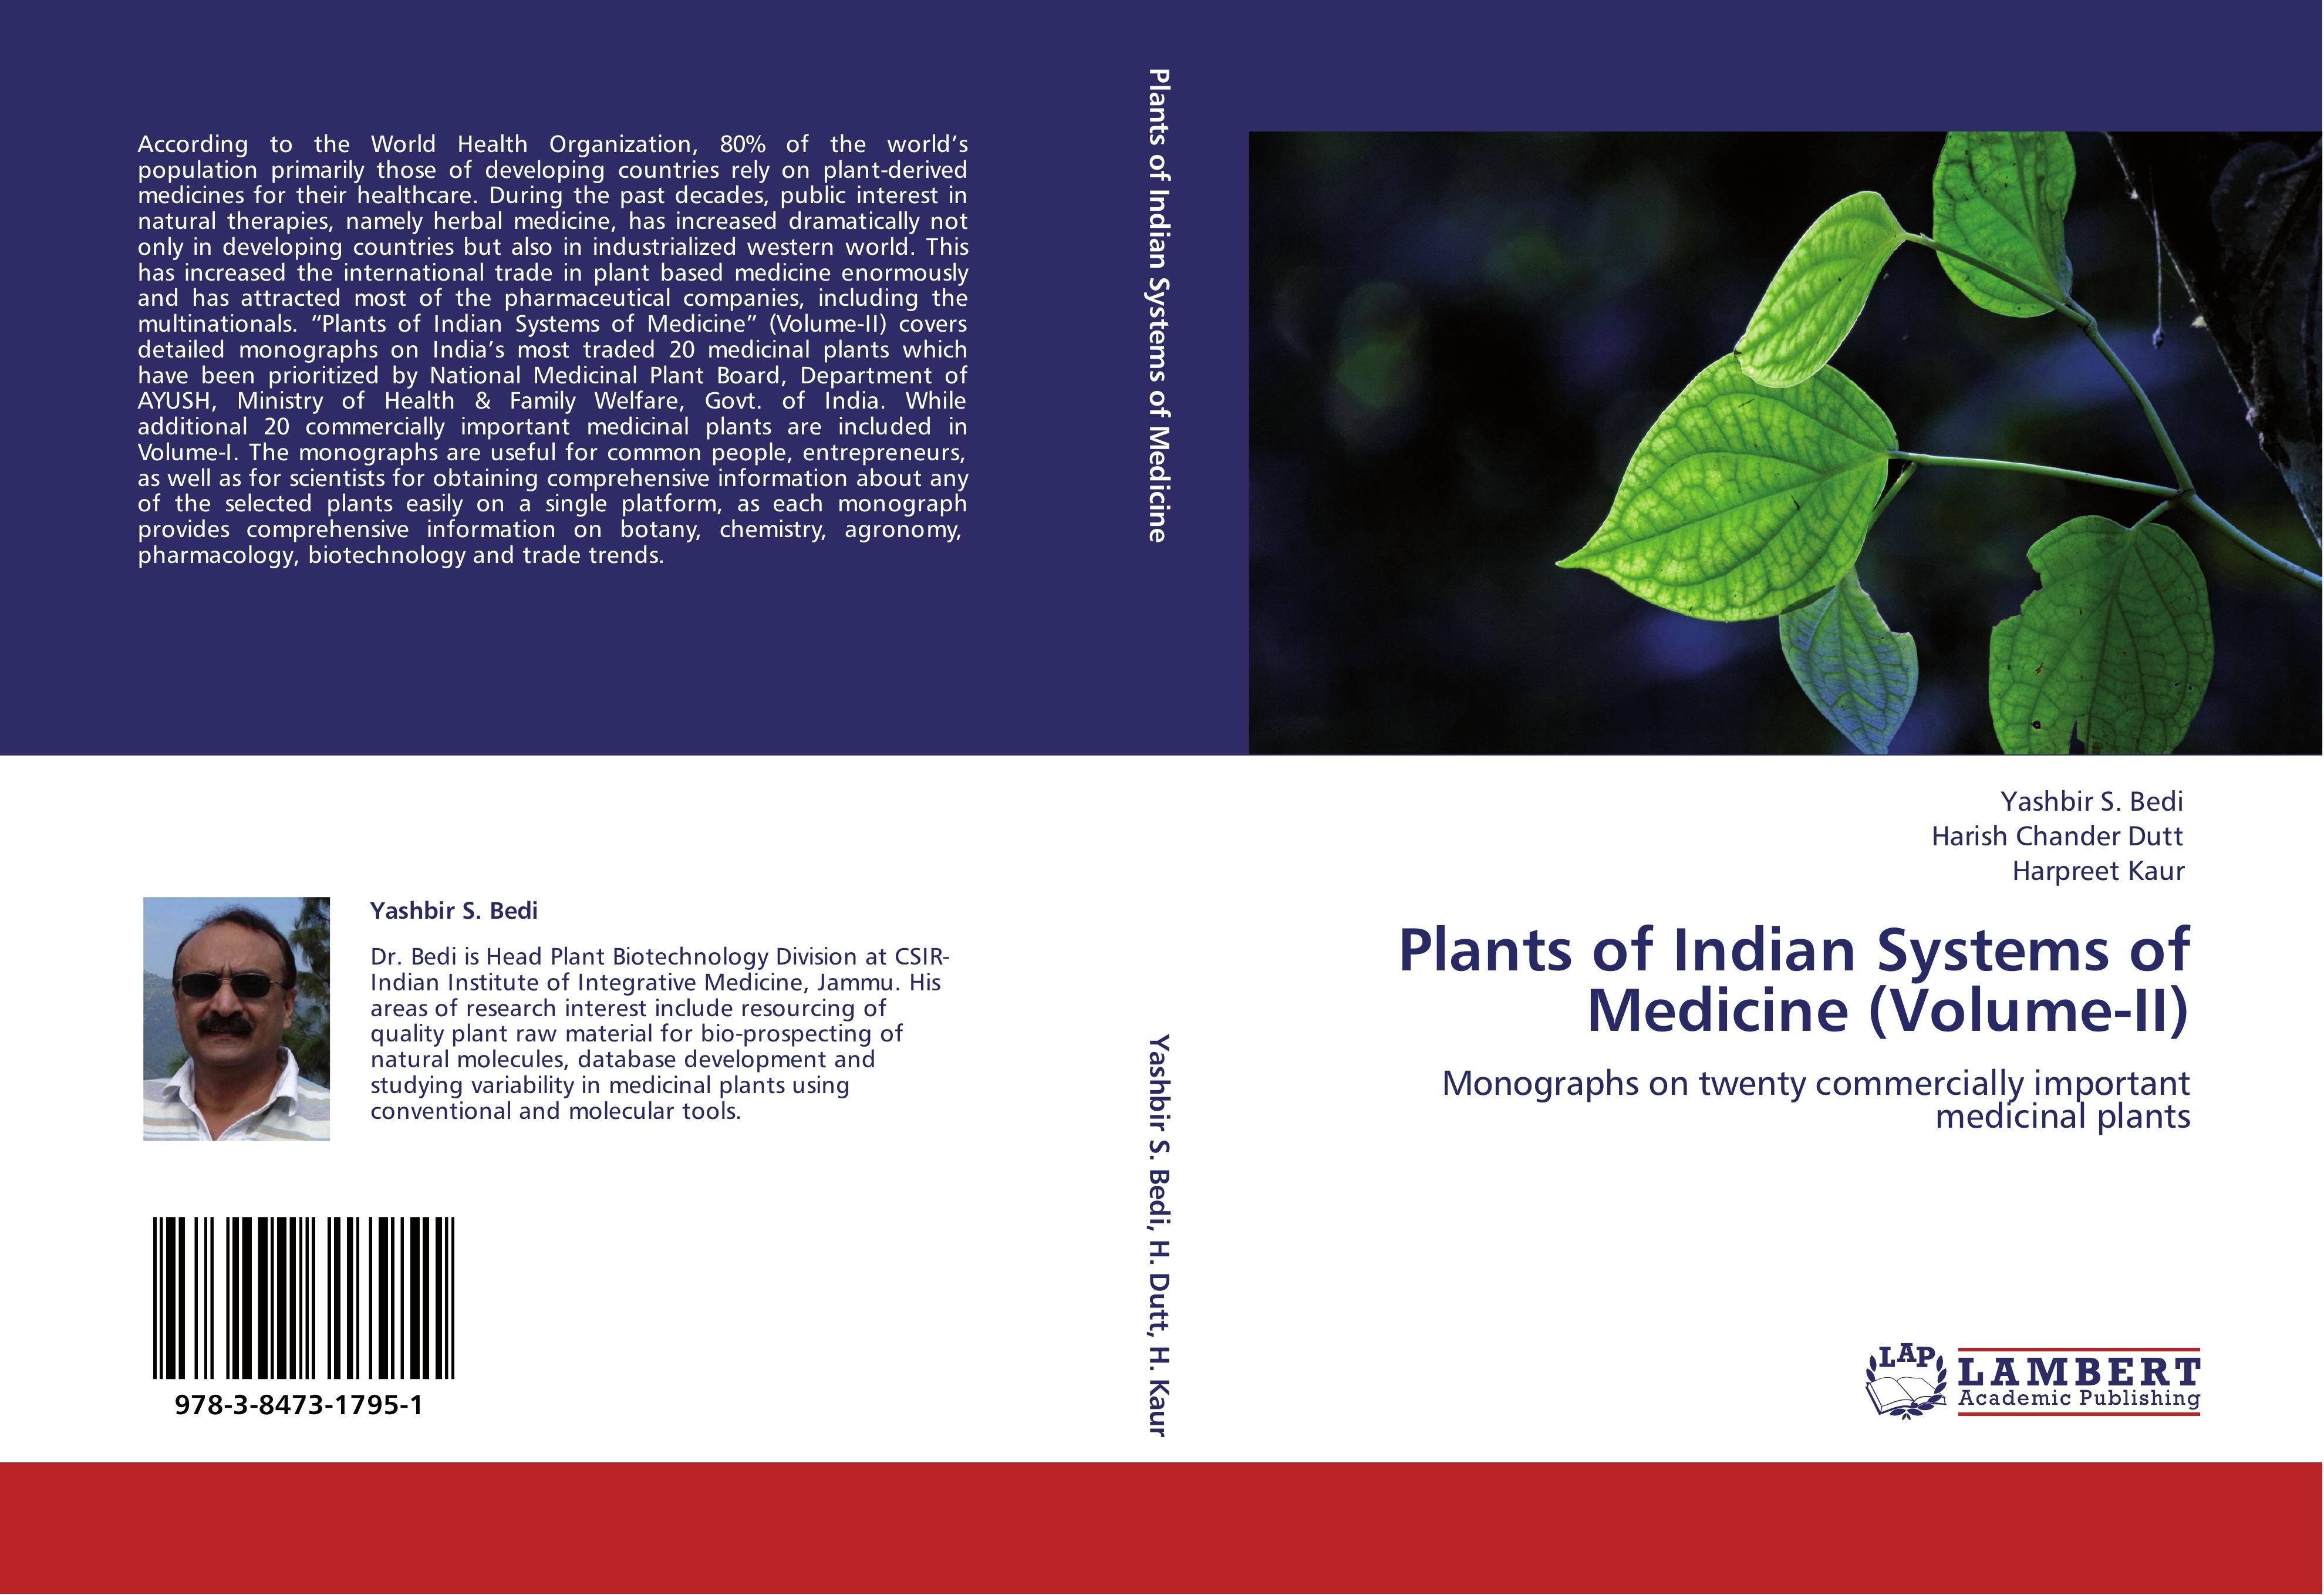 Plants of Indian Systems of Medicine (Volume-II) - Yashbir S. Bedi Harish Chander Dutt HARPREET KAUR